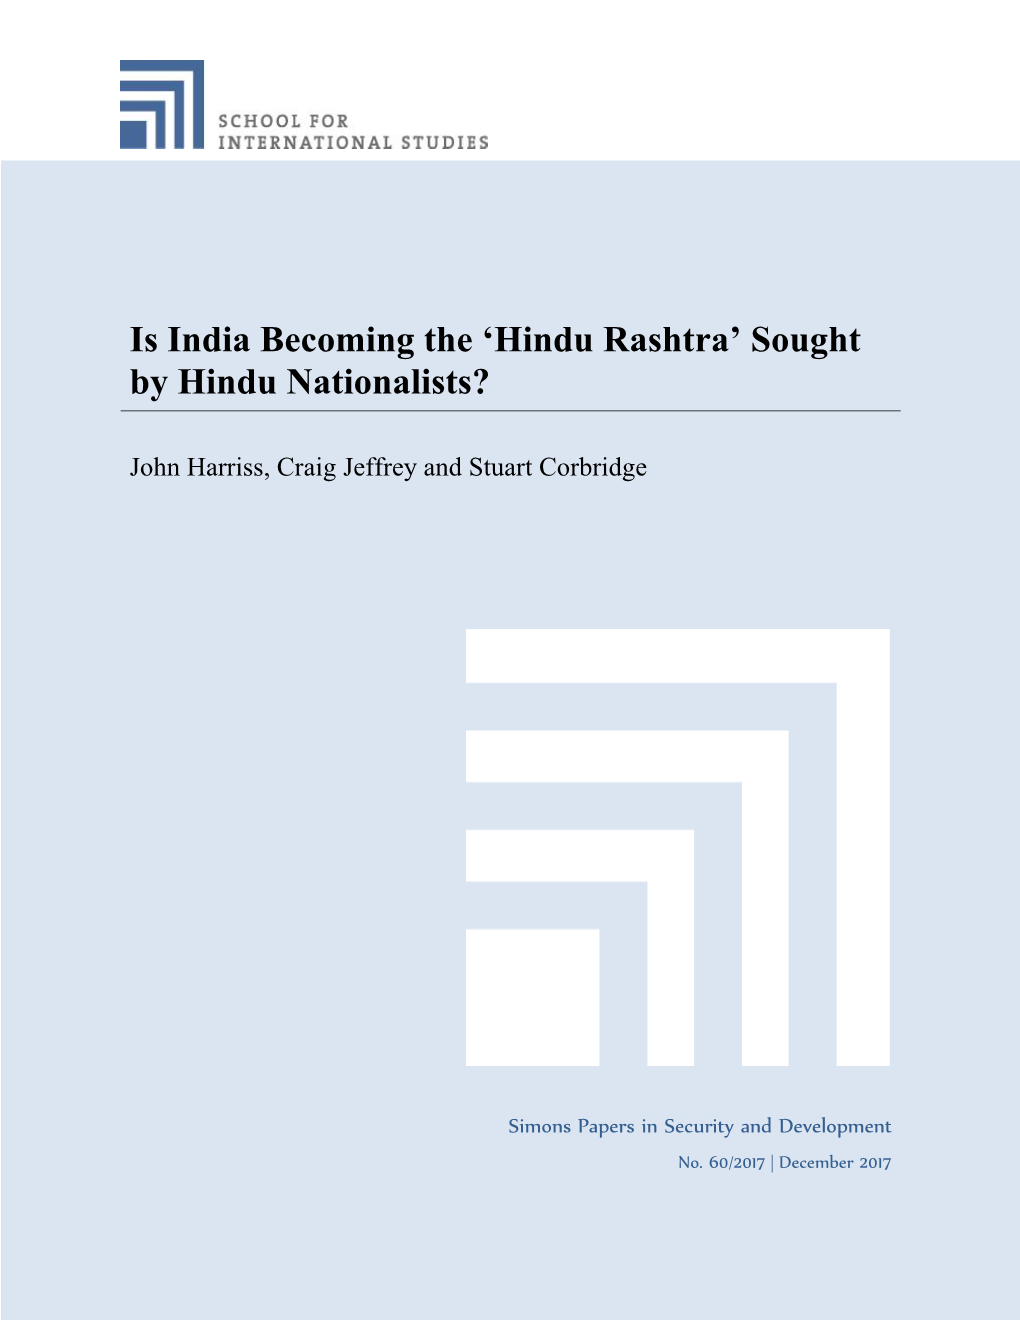 Hindu Rashtra’ Sought by Hindu Nationalists?